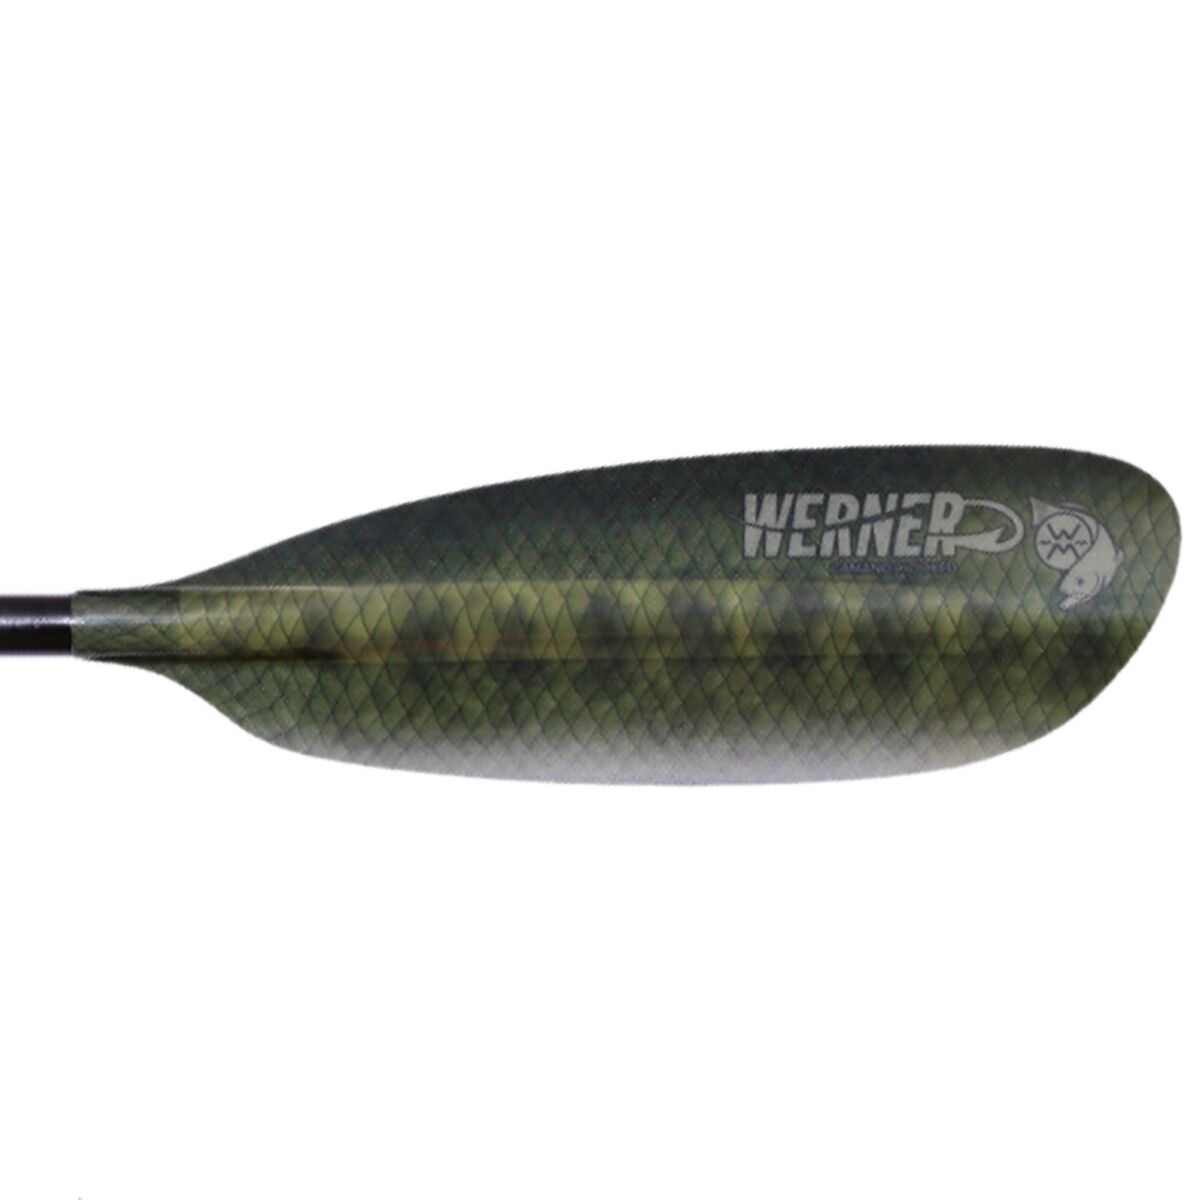 Werner Camano - двухкомпонентное рыболовное весло с крючком Leverlock 20 Werner